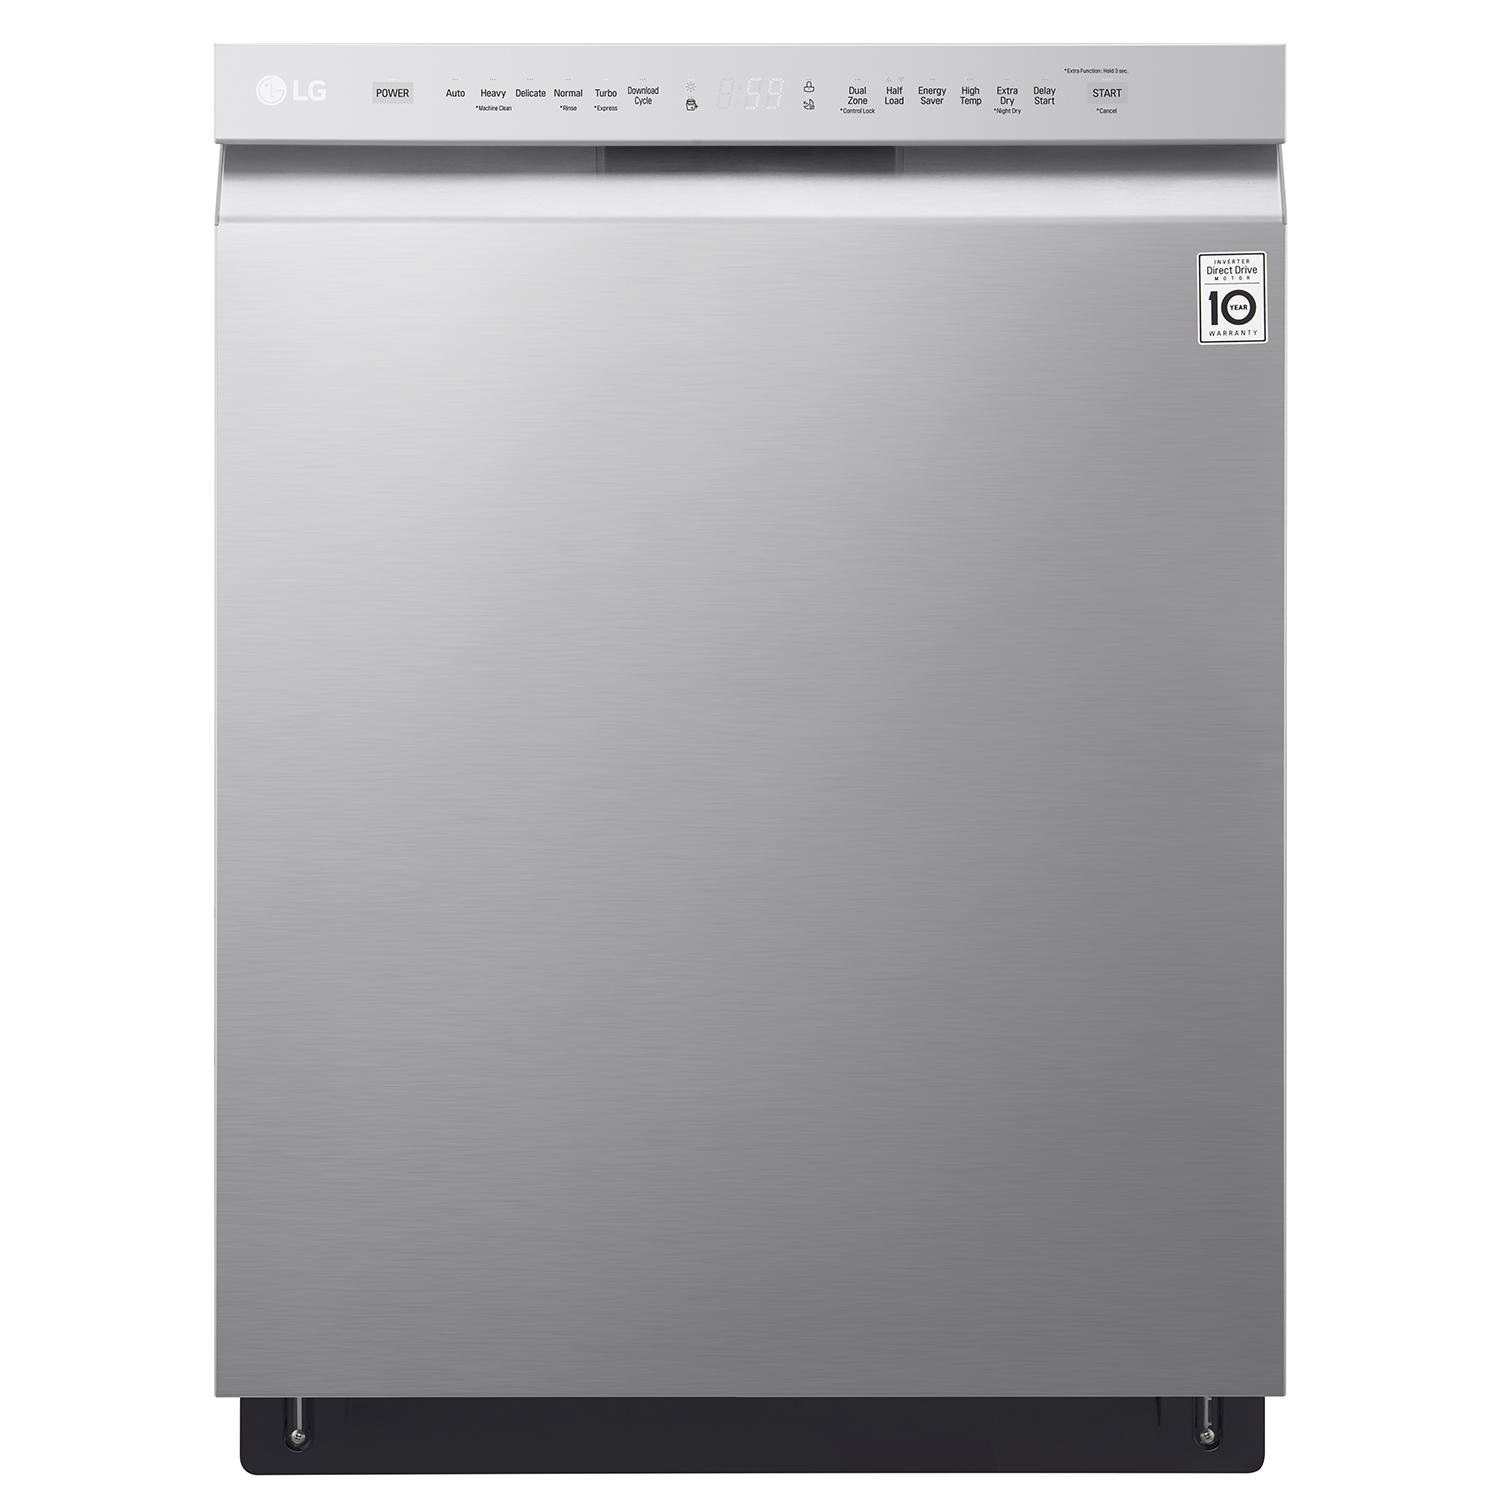 LG Front Control Dishwasher with QuadWash, 48 dBA